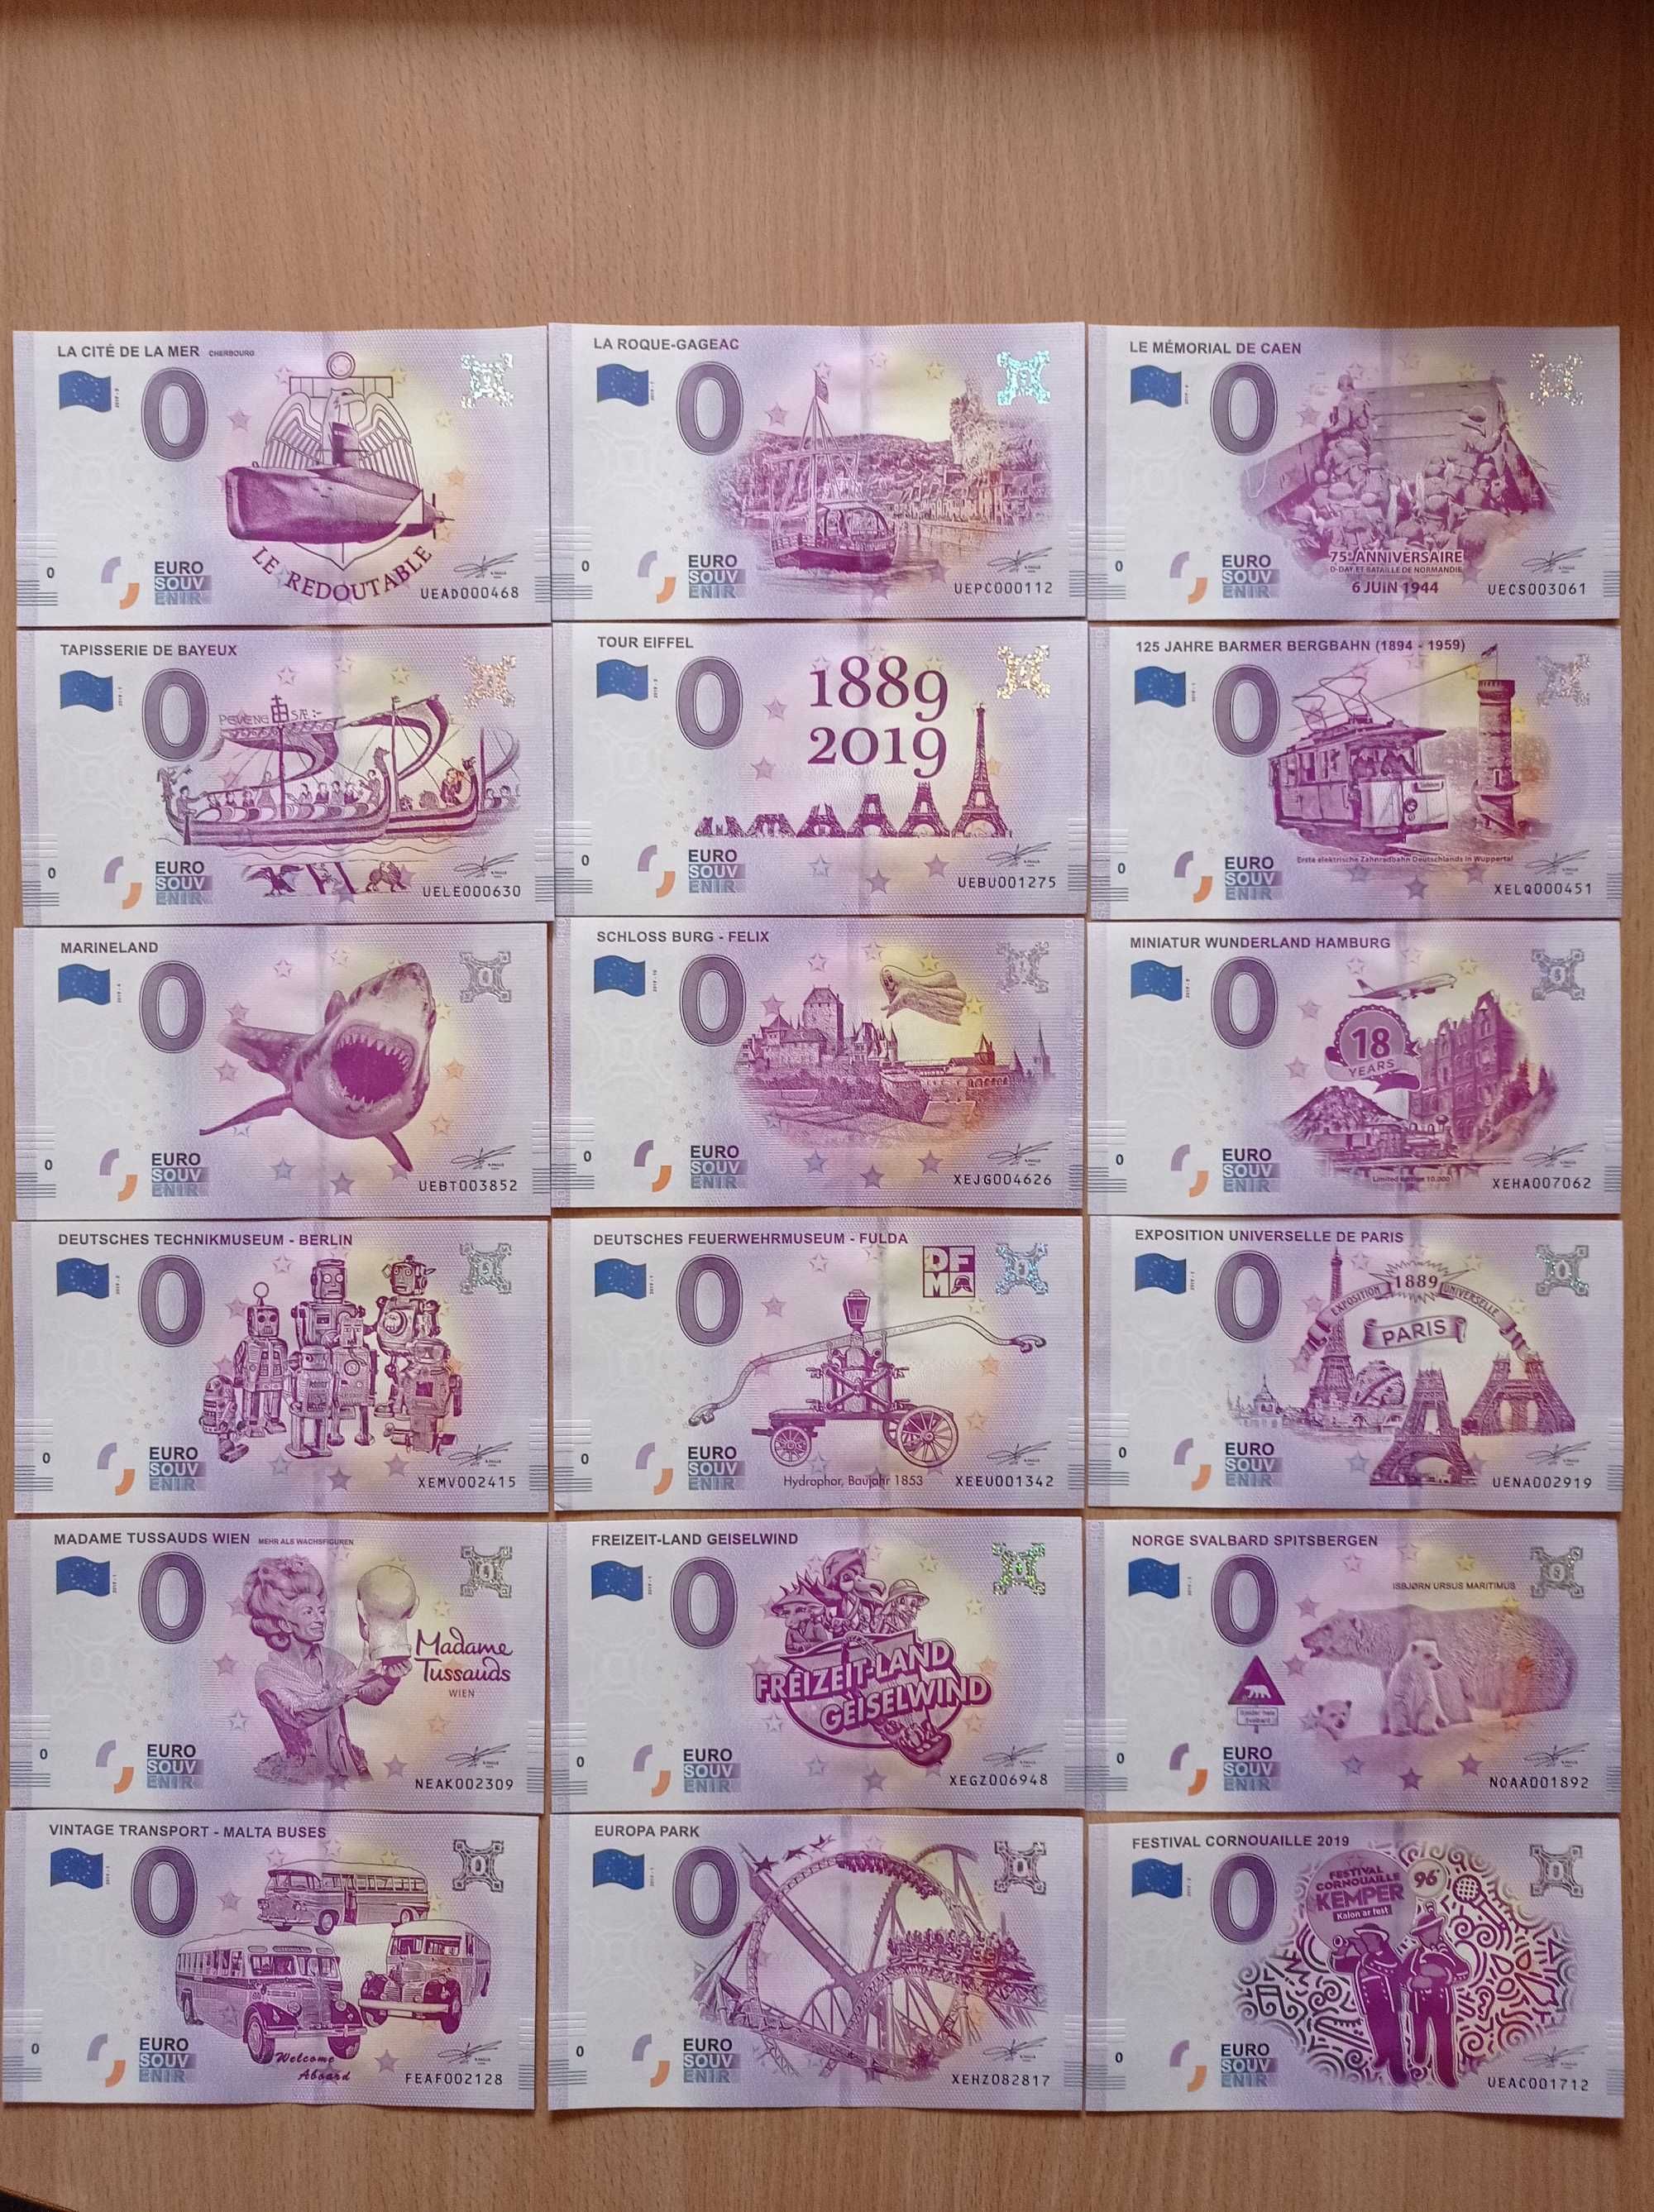 0 Евро / 0 Euro INDONESIA-SUMATRAN TIGER.Банкнота 2019 рік.UNC.